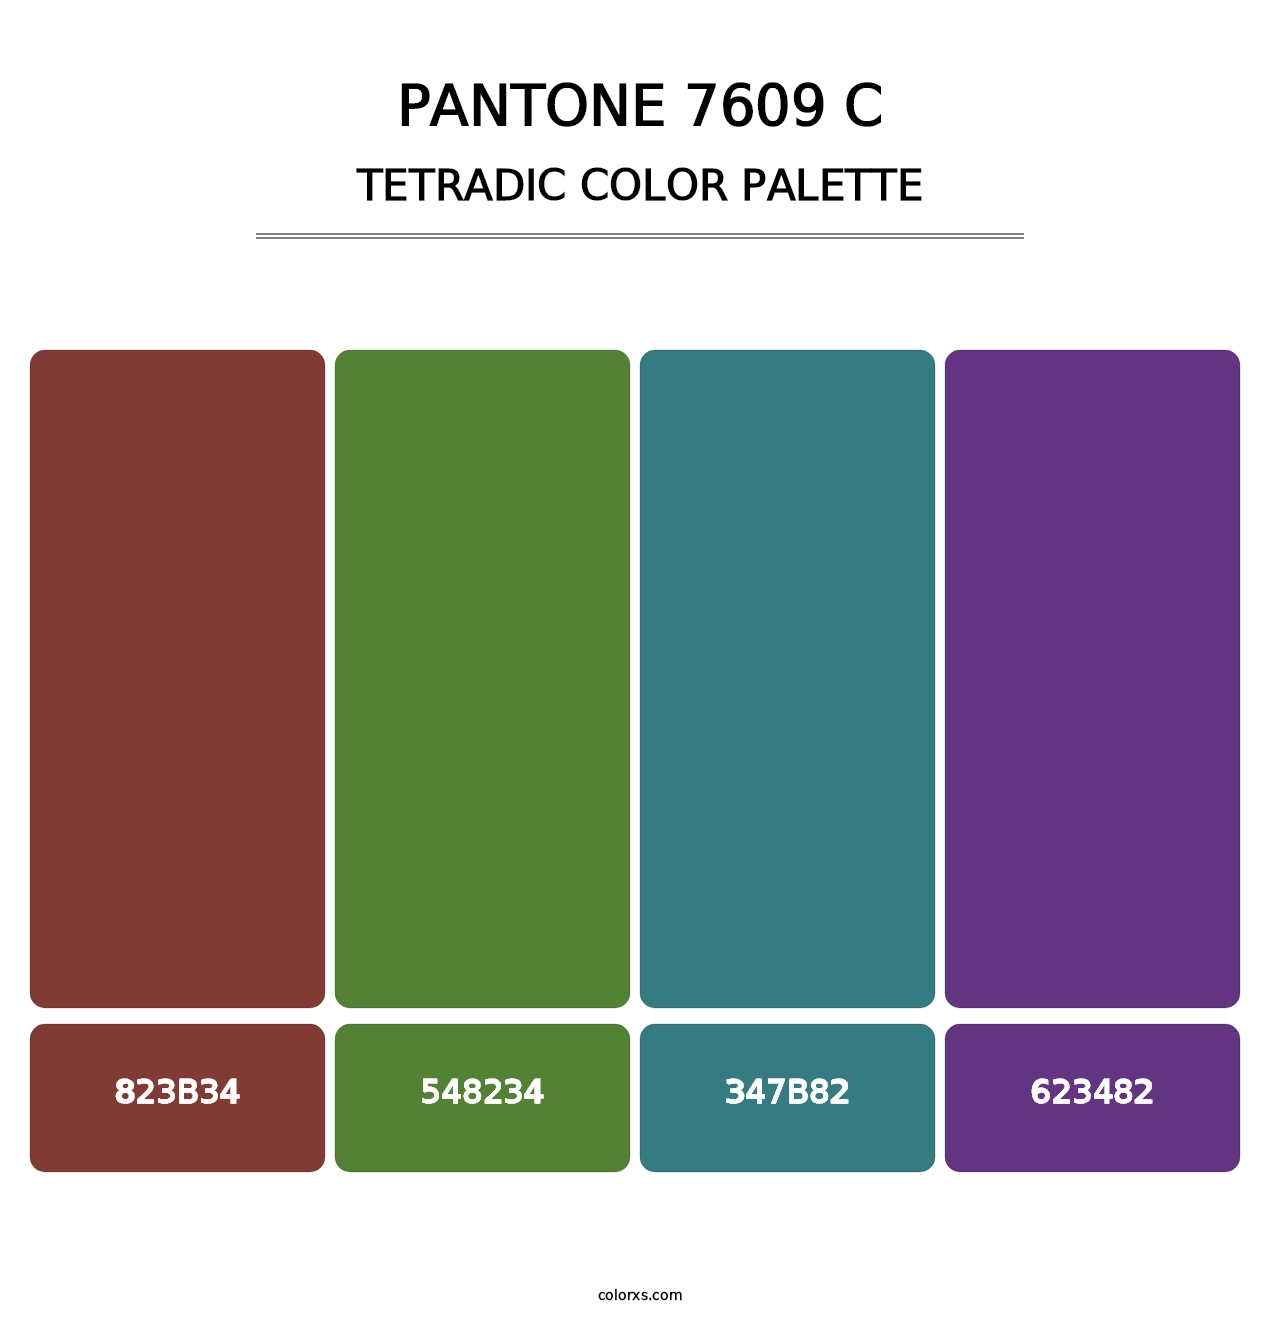 PANTONE 7609 C - Tetradic Color Palette